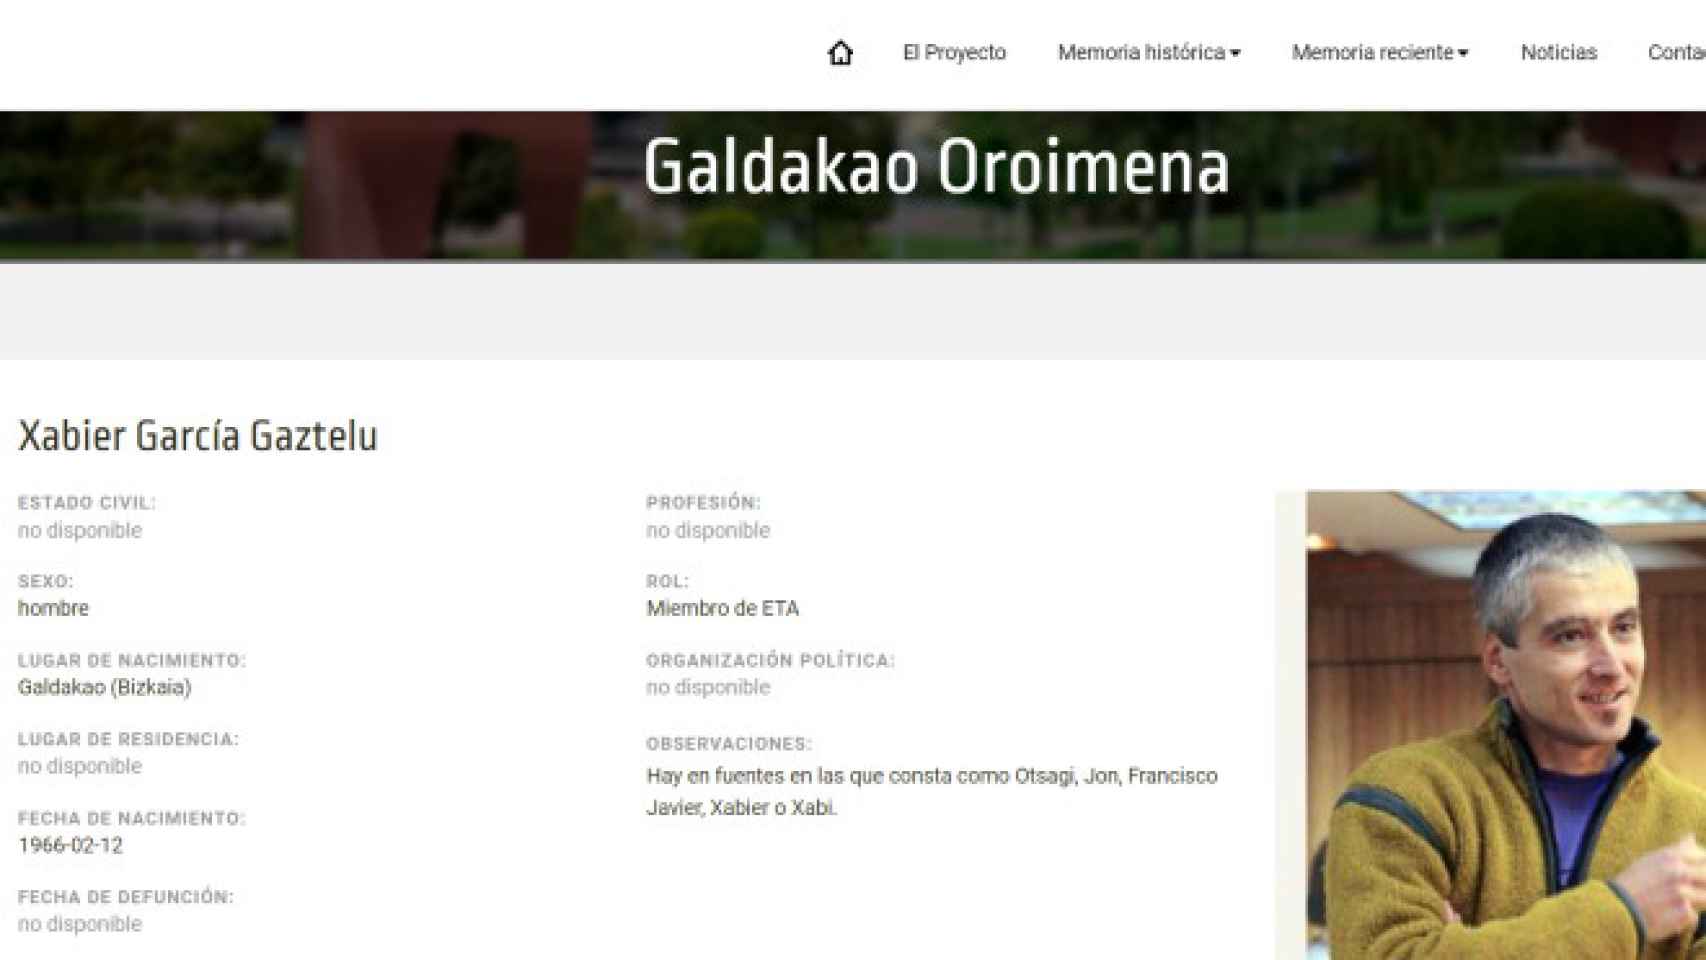 Captura del perfil de Xabier Garca Gaztelu 'Txapote' en la web Galdakao Oroimena